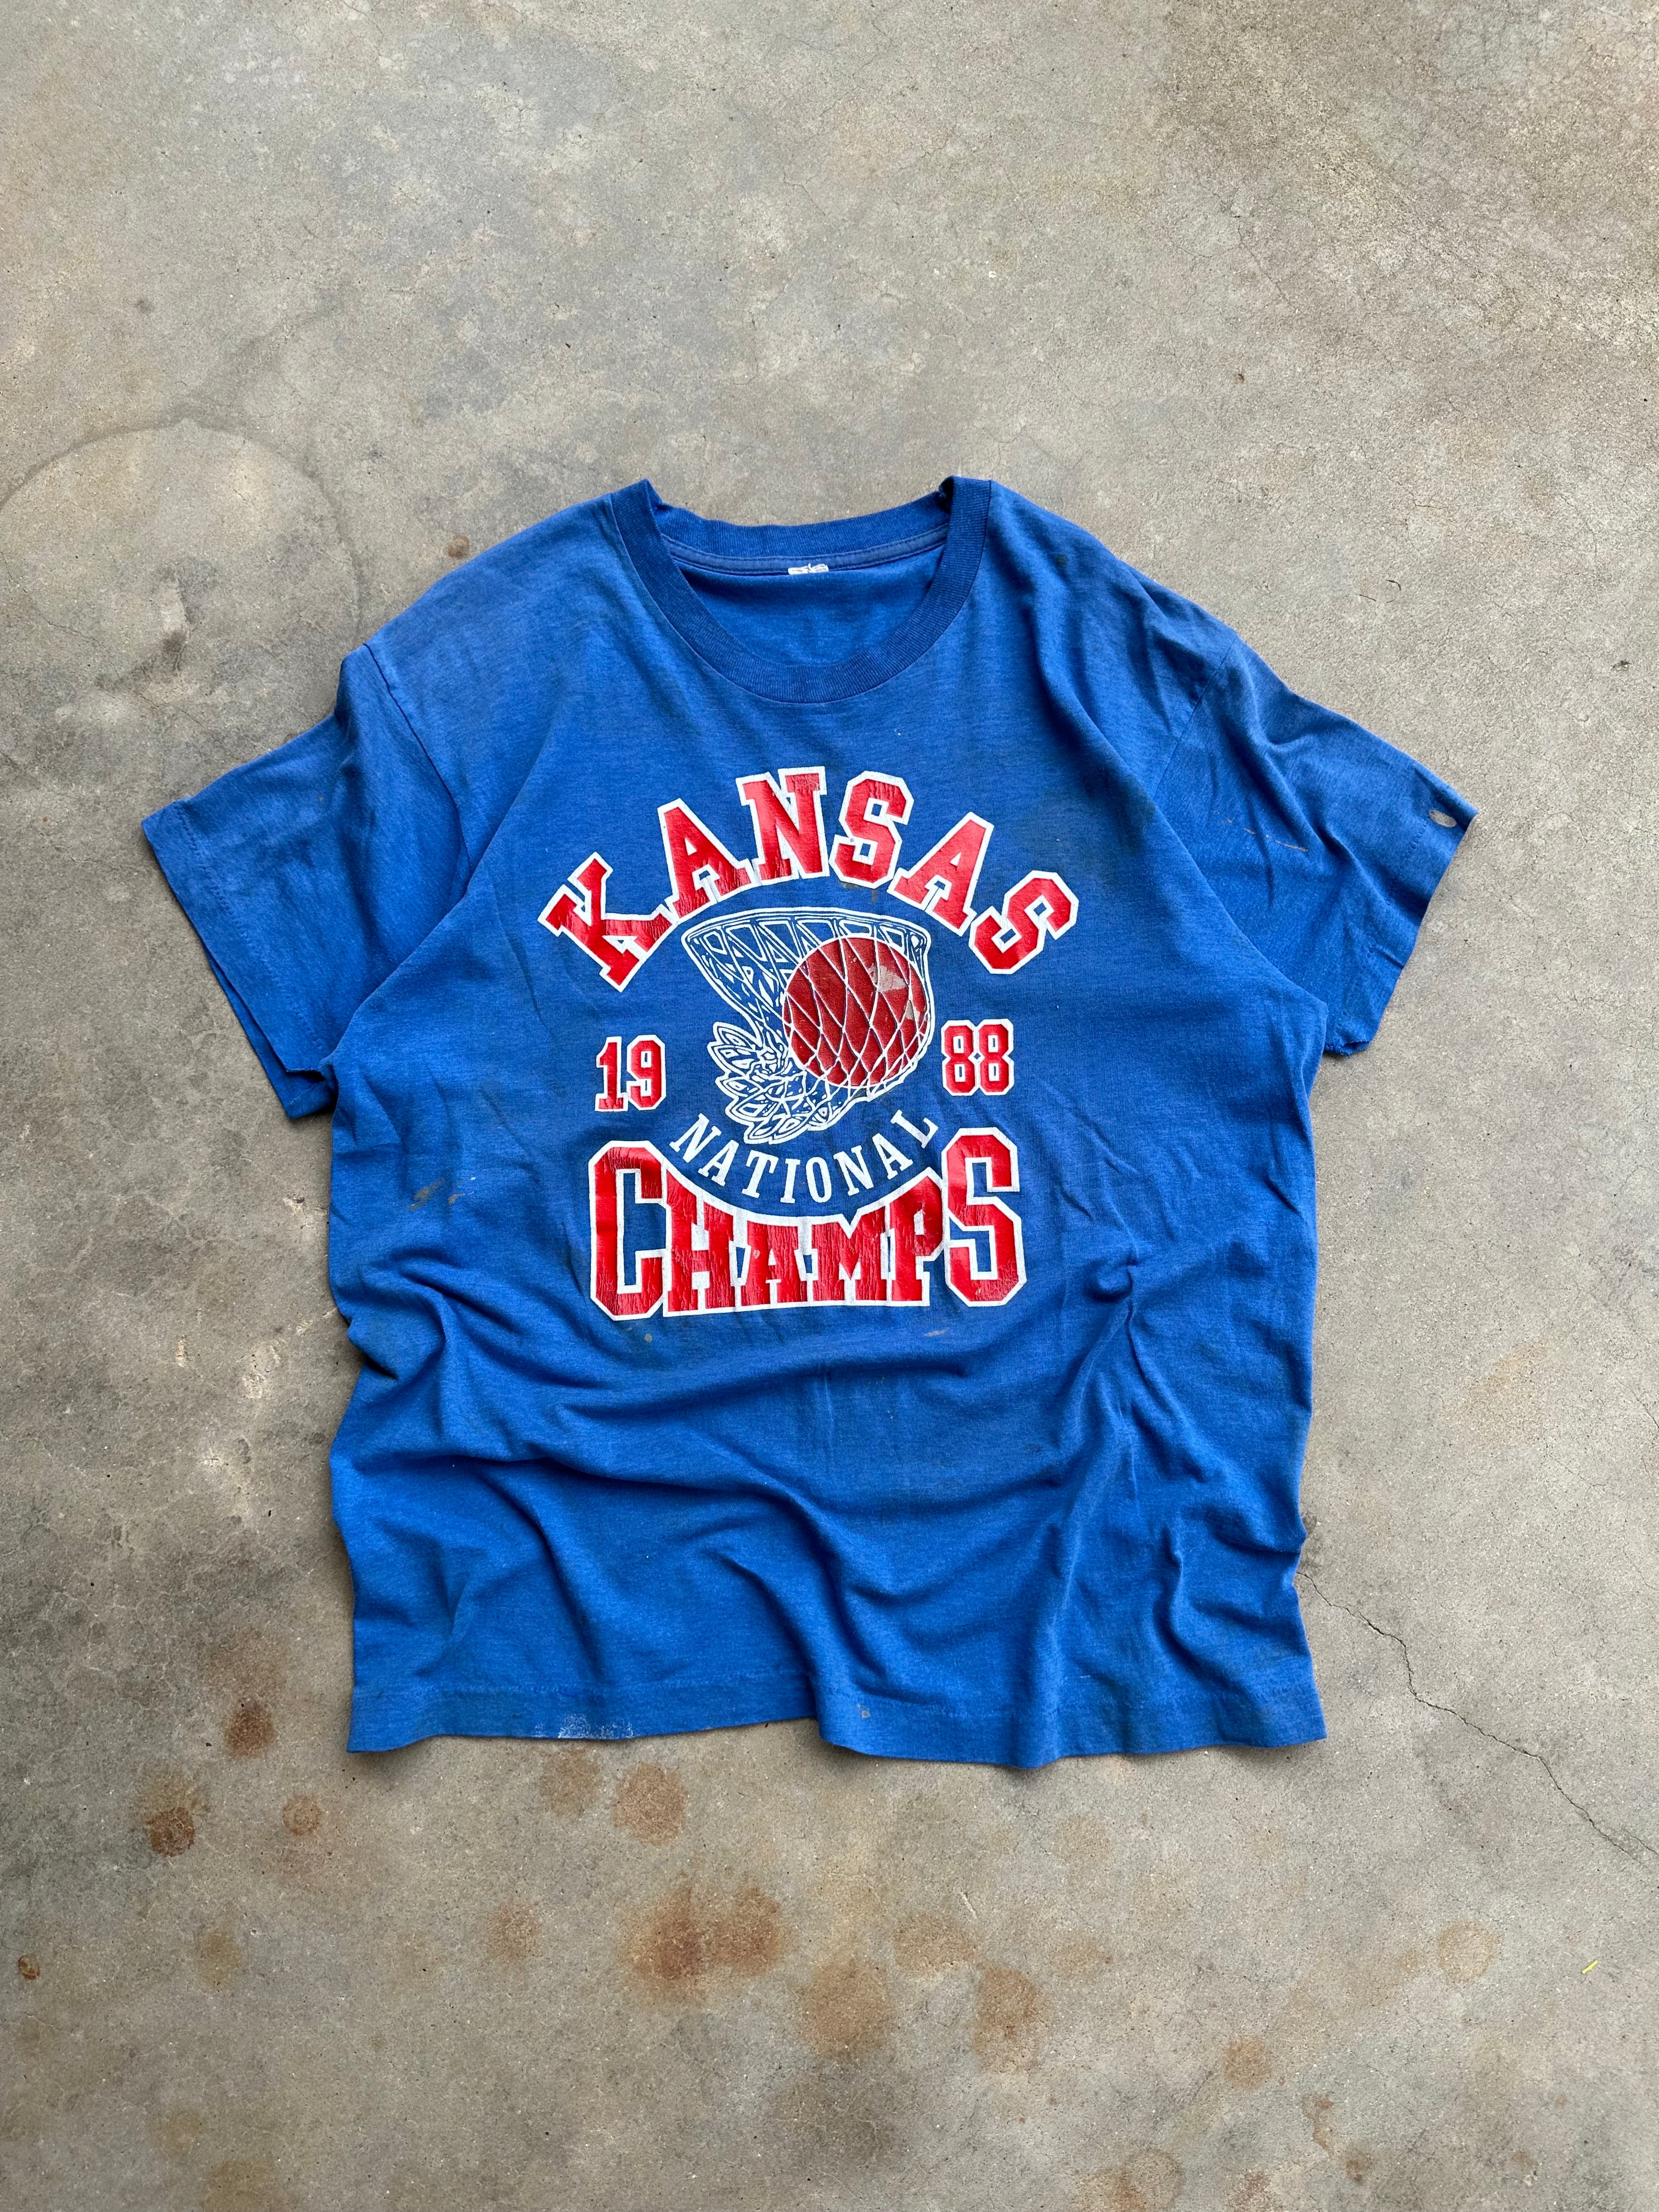 1988 Distressed/Worn Kansas National Champions T-Shirt (L)